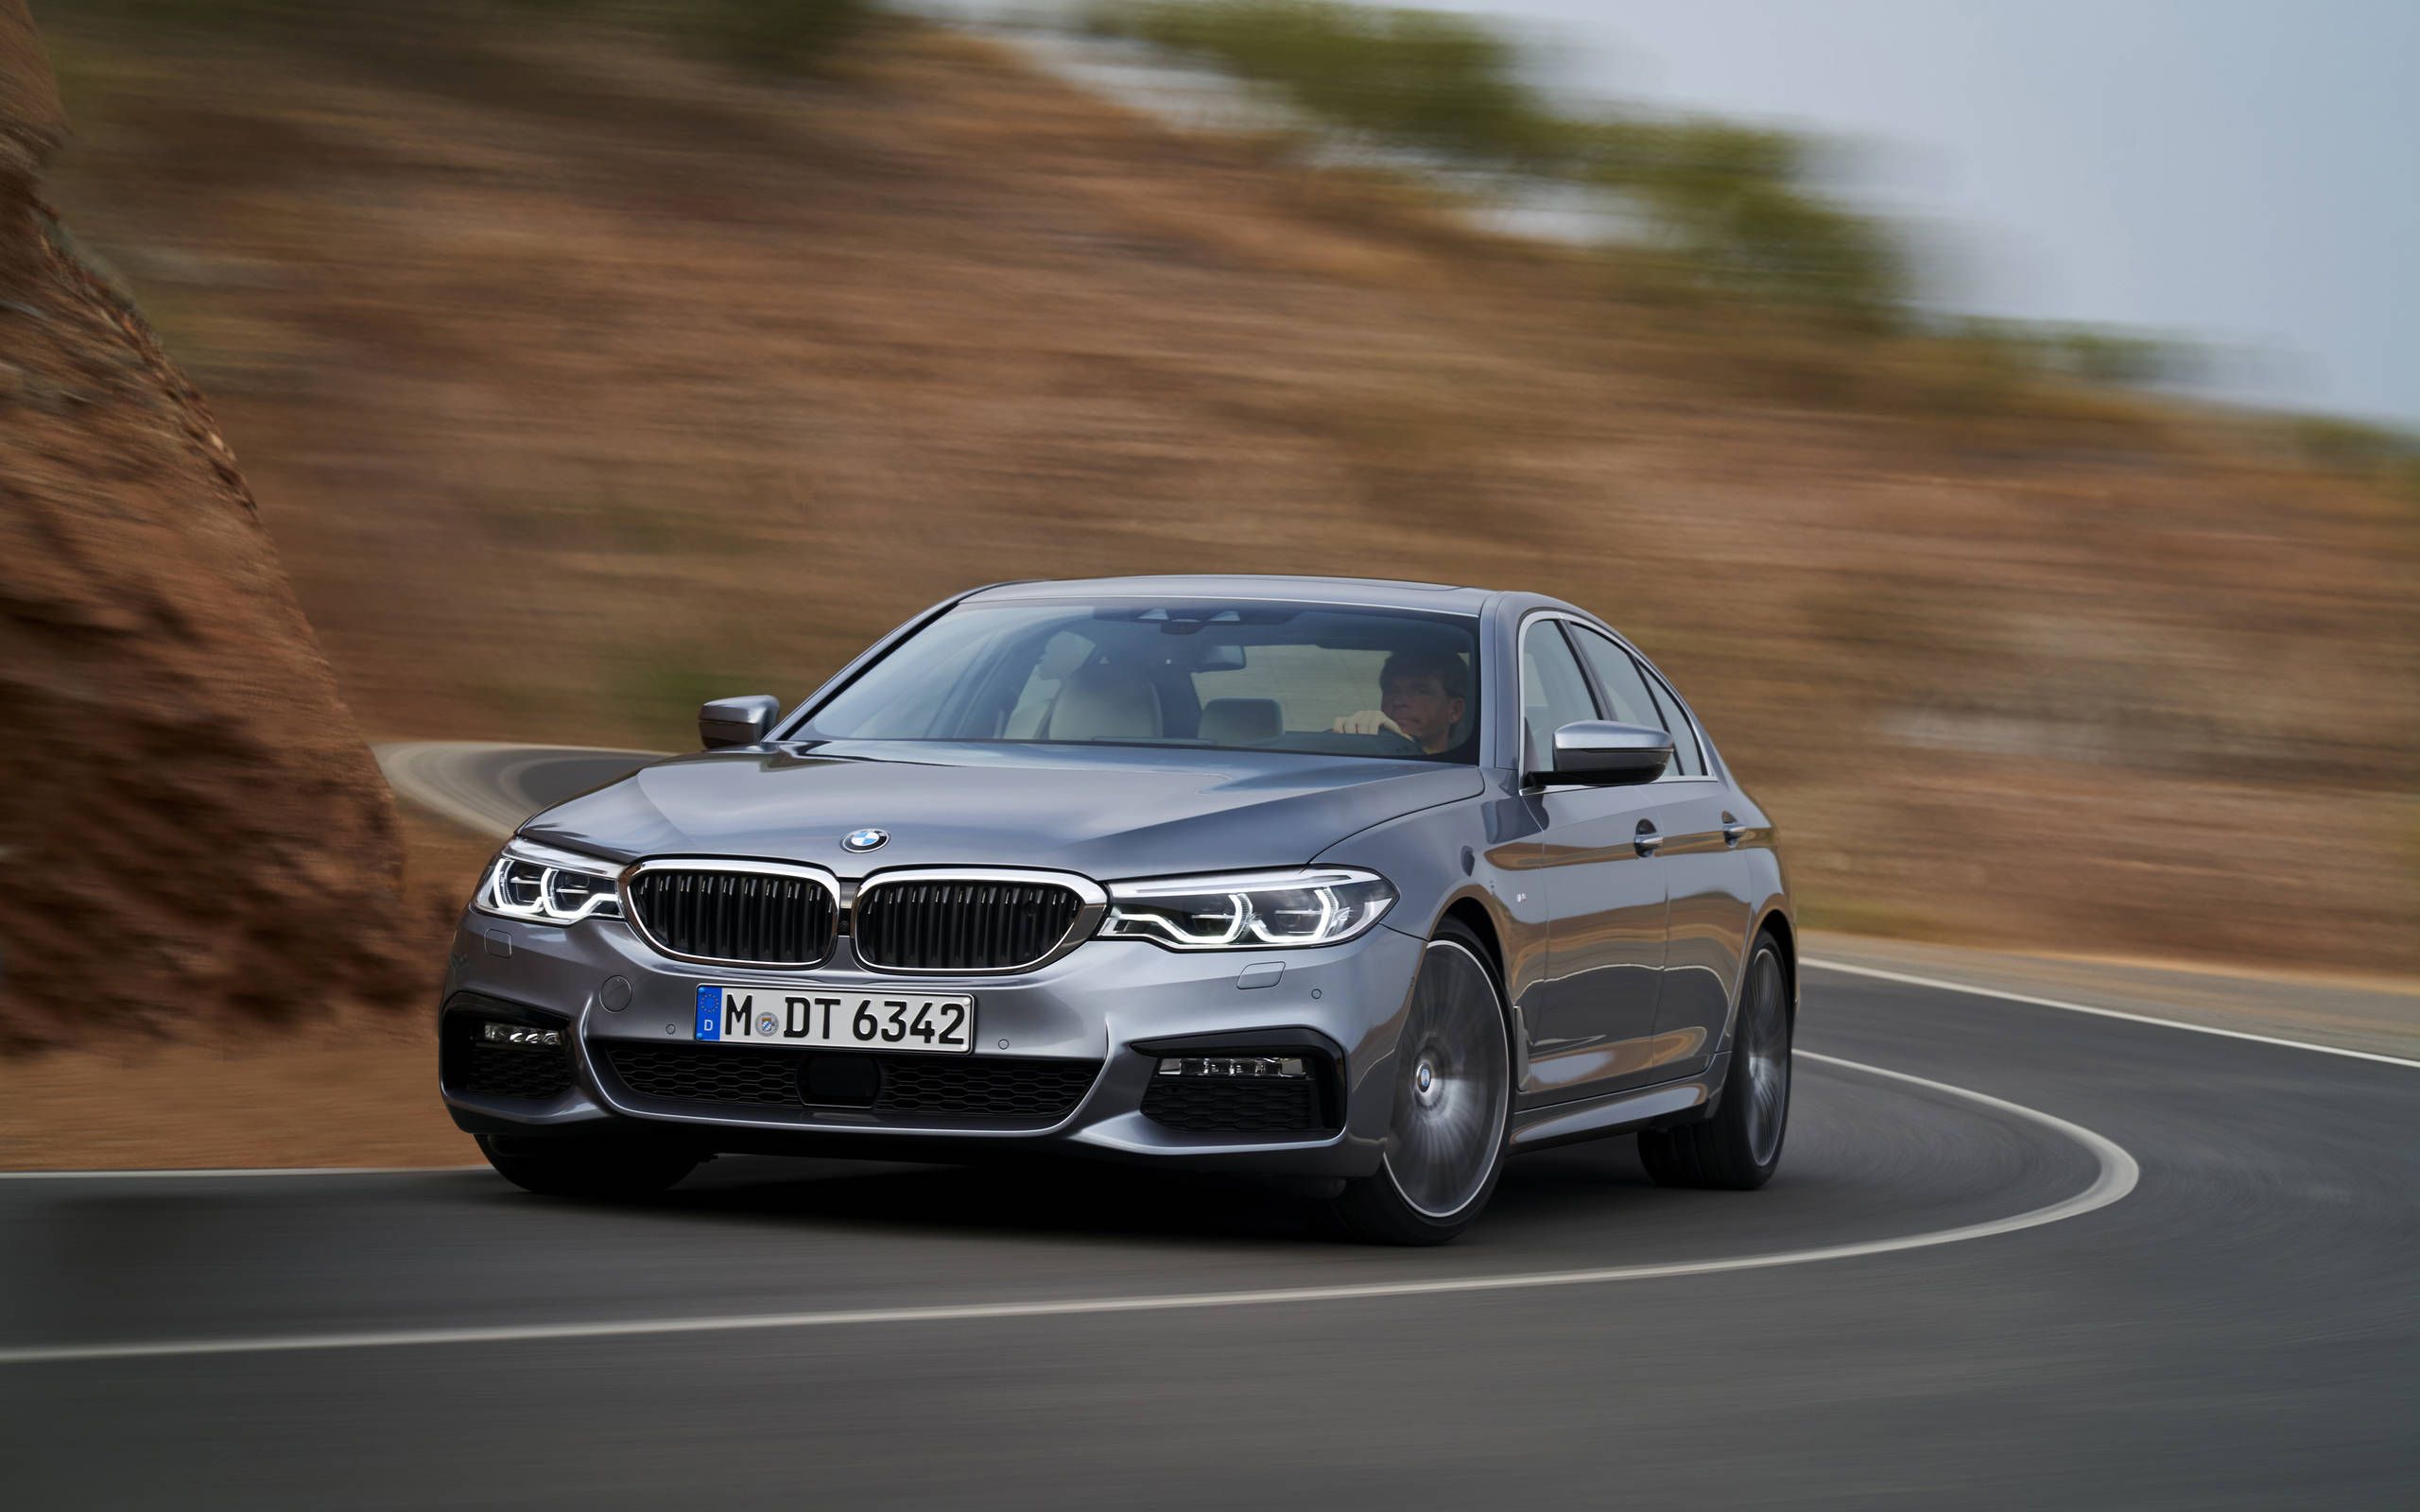 Uitbreiding Rechtsaf schilder 2017 BMW 540i review: More luxury than sport sedan